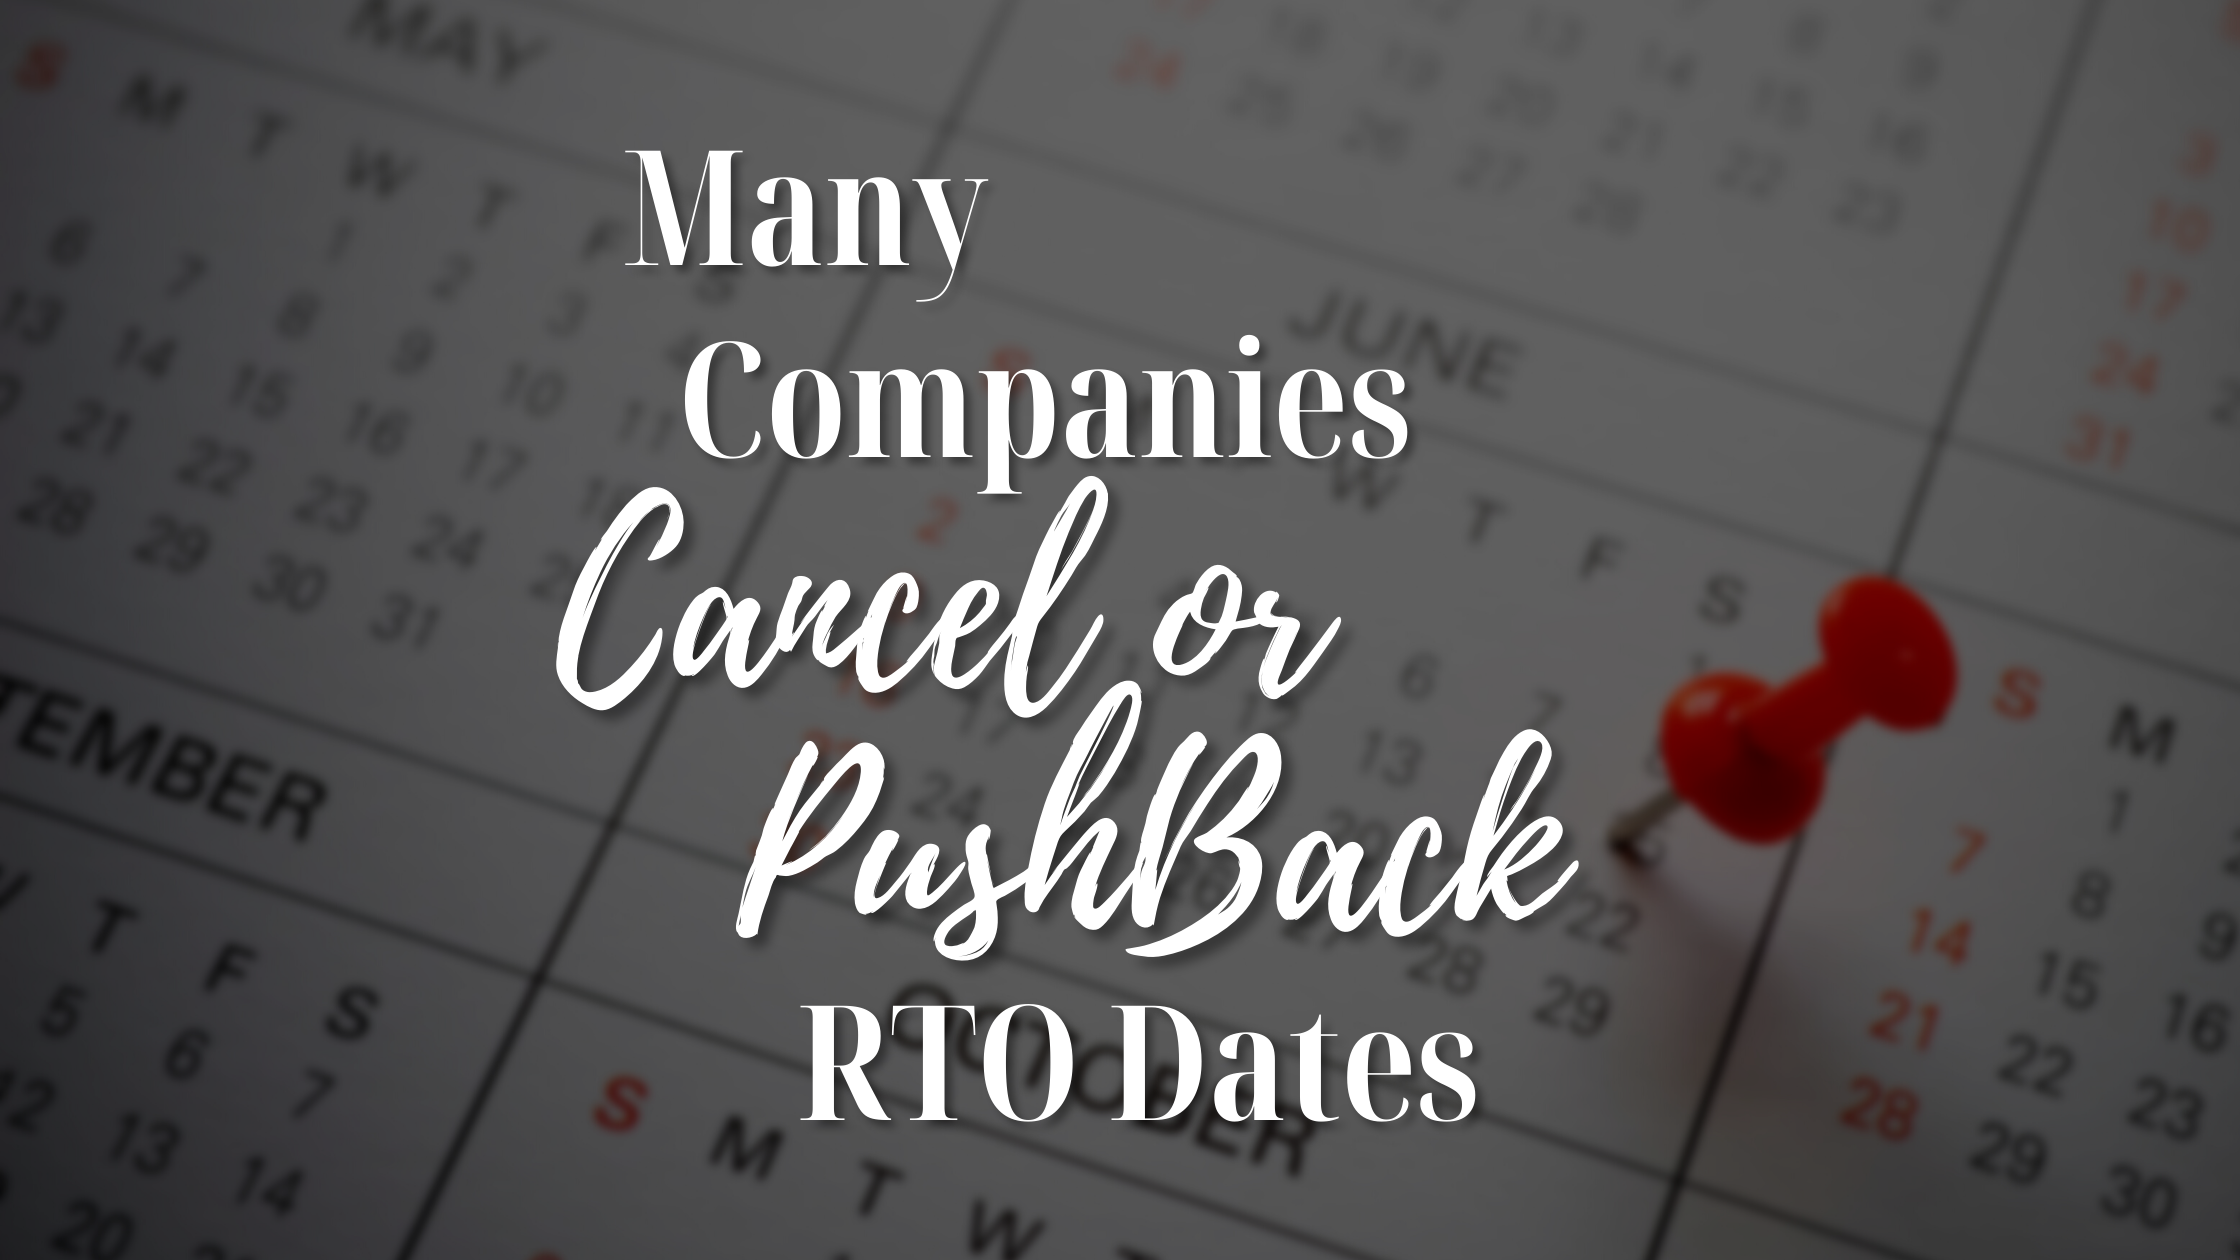 Many Companies Cancel, Push Back RTO Dates